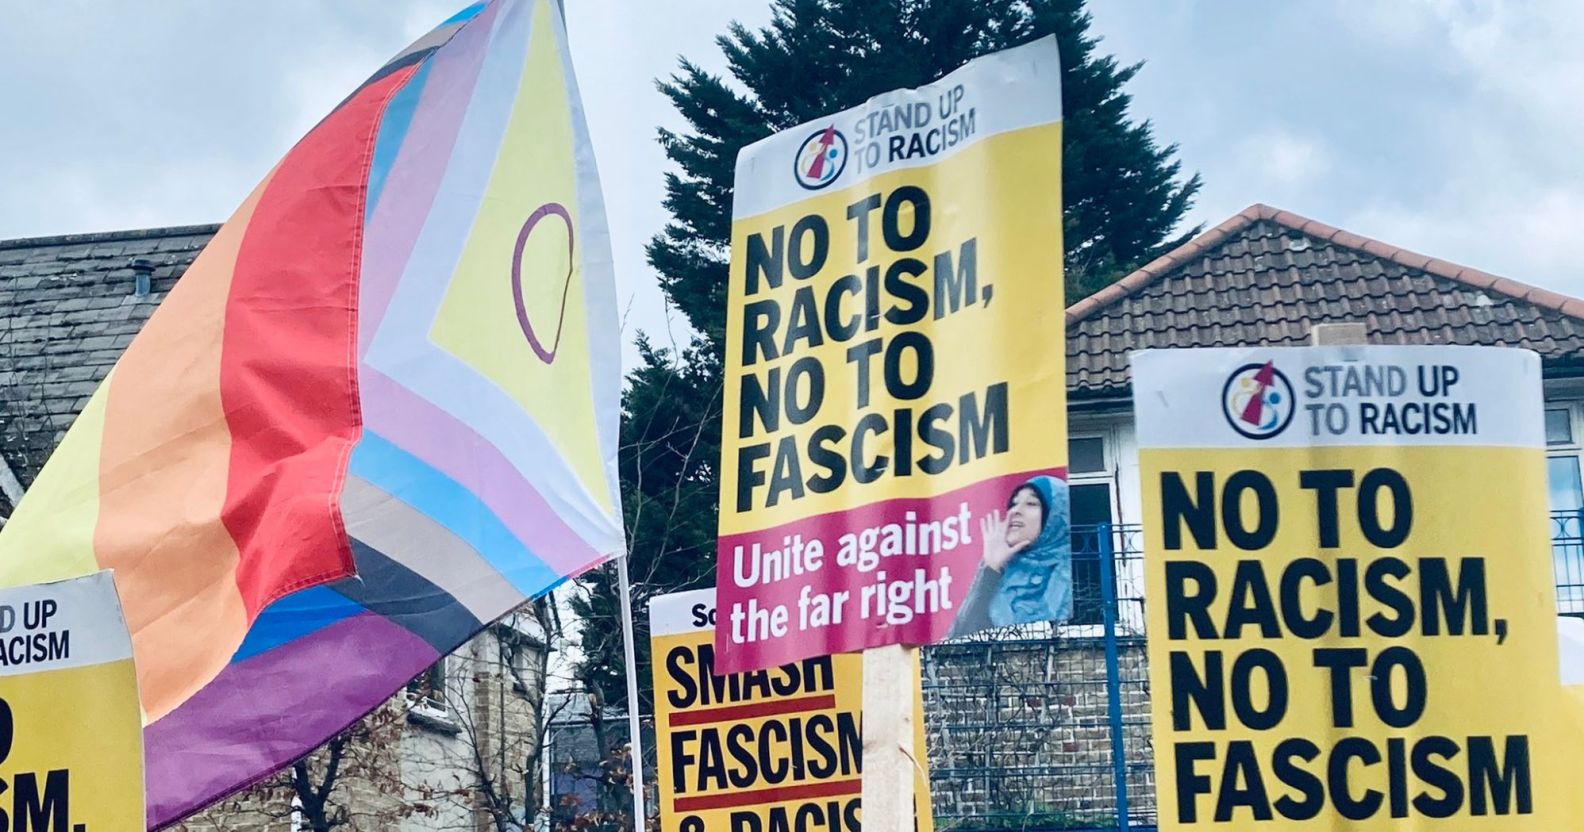 Anti-fascism and LGBTQ+ signs raised at the Honor Oak Pub.